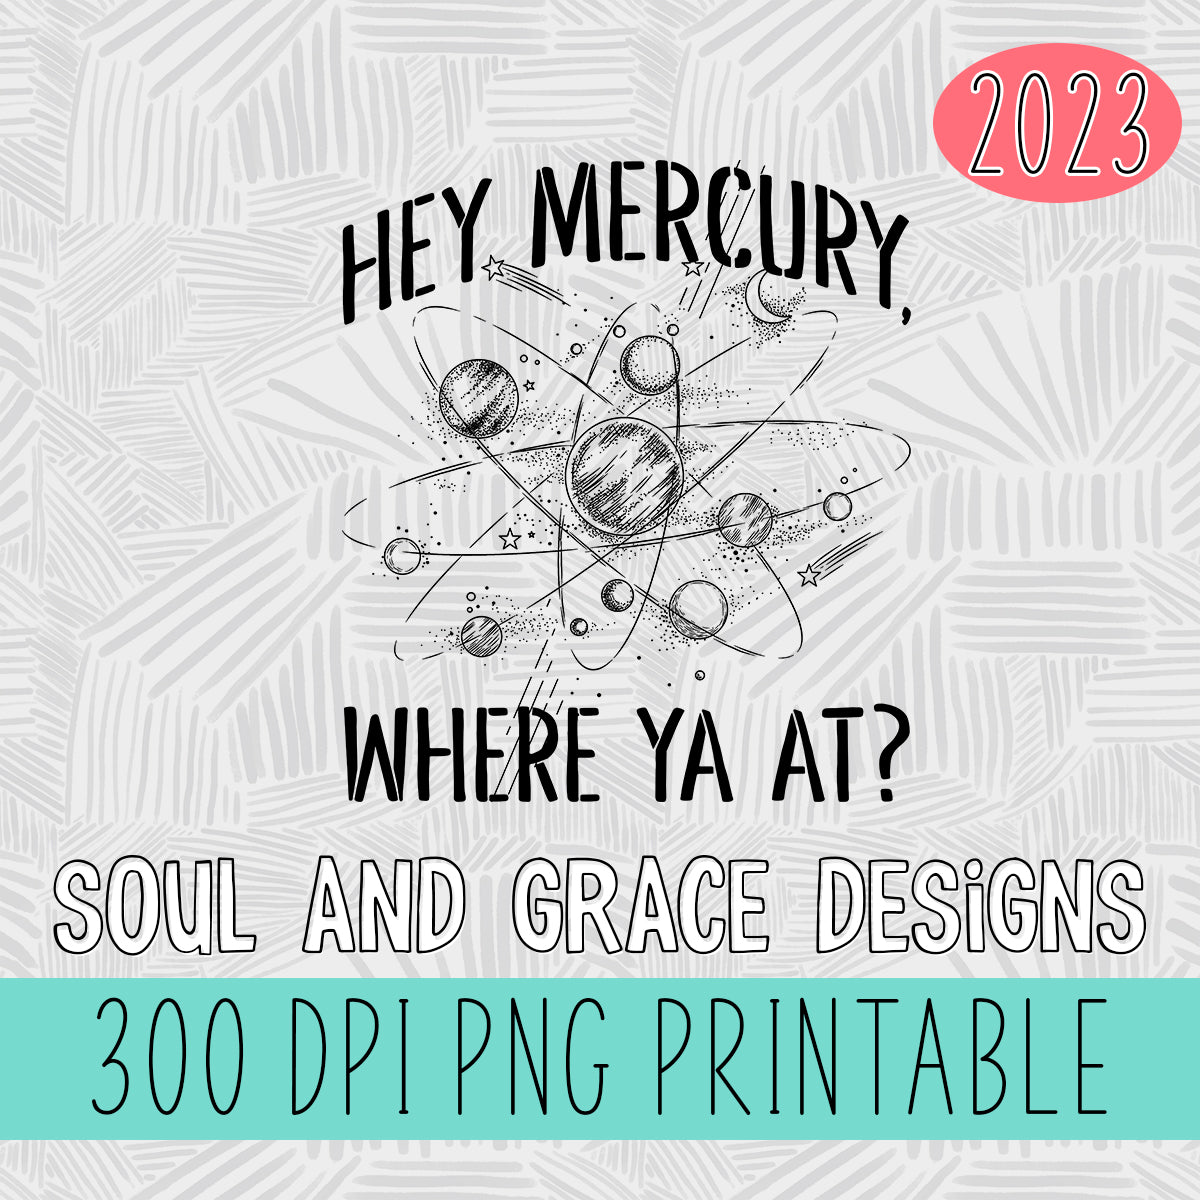 Hey Mercury, Where Ya At?